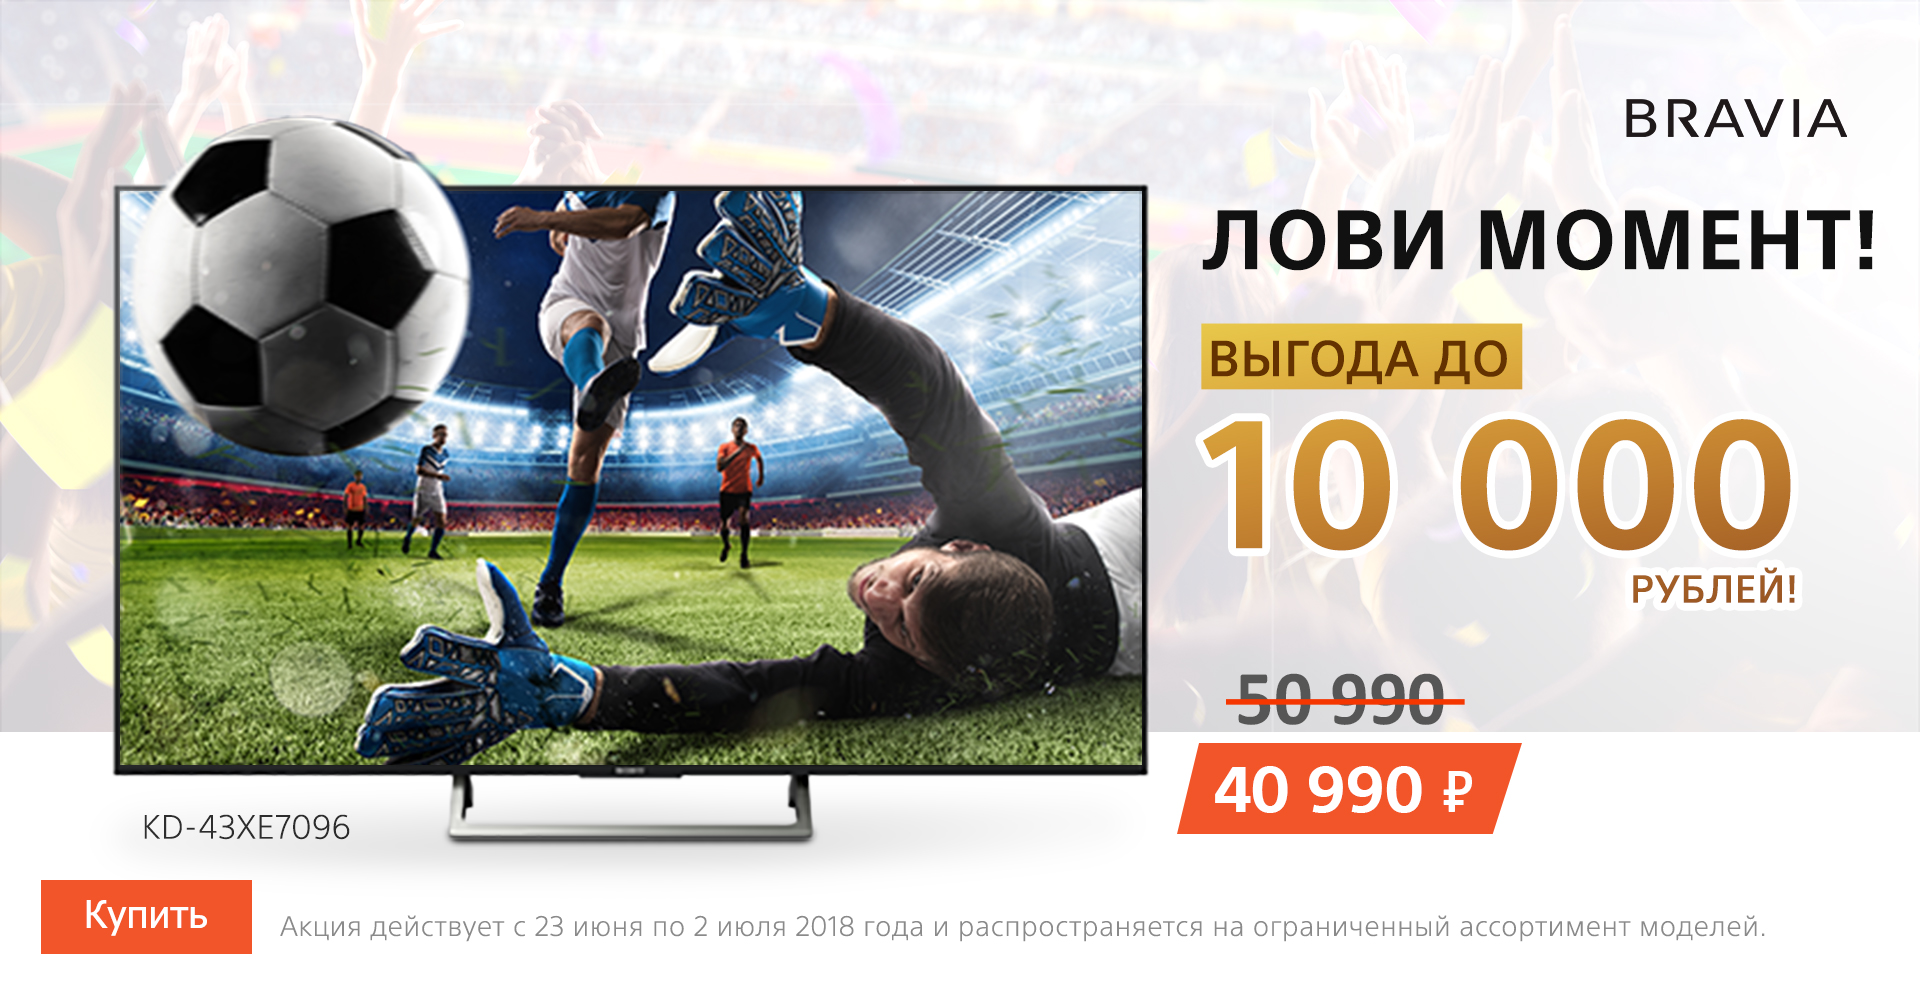 Лови момент! Выгода на ТВ до 10 000 рублей.